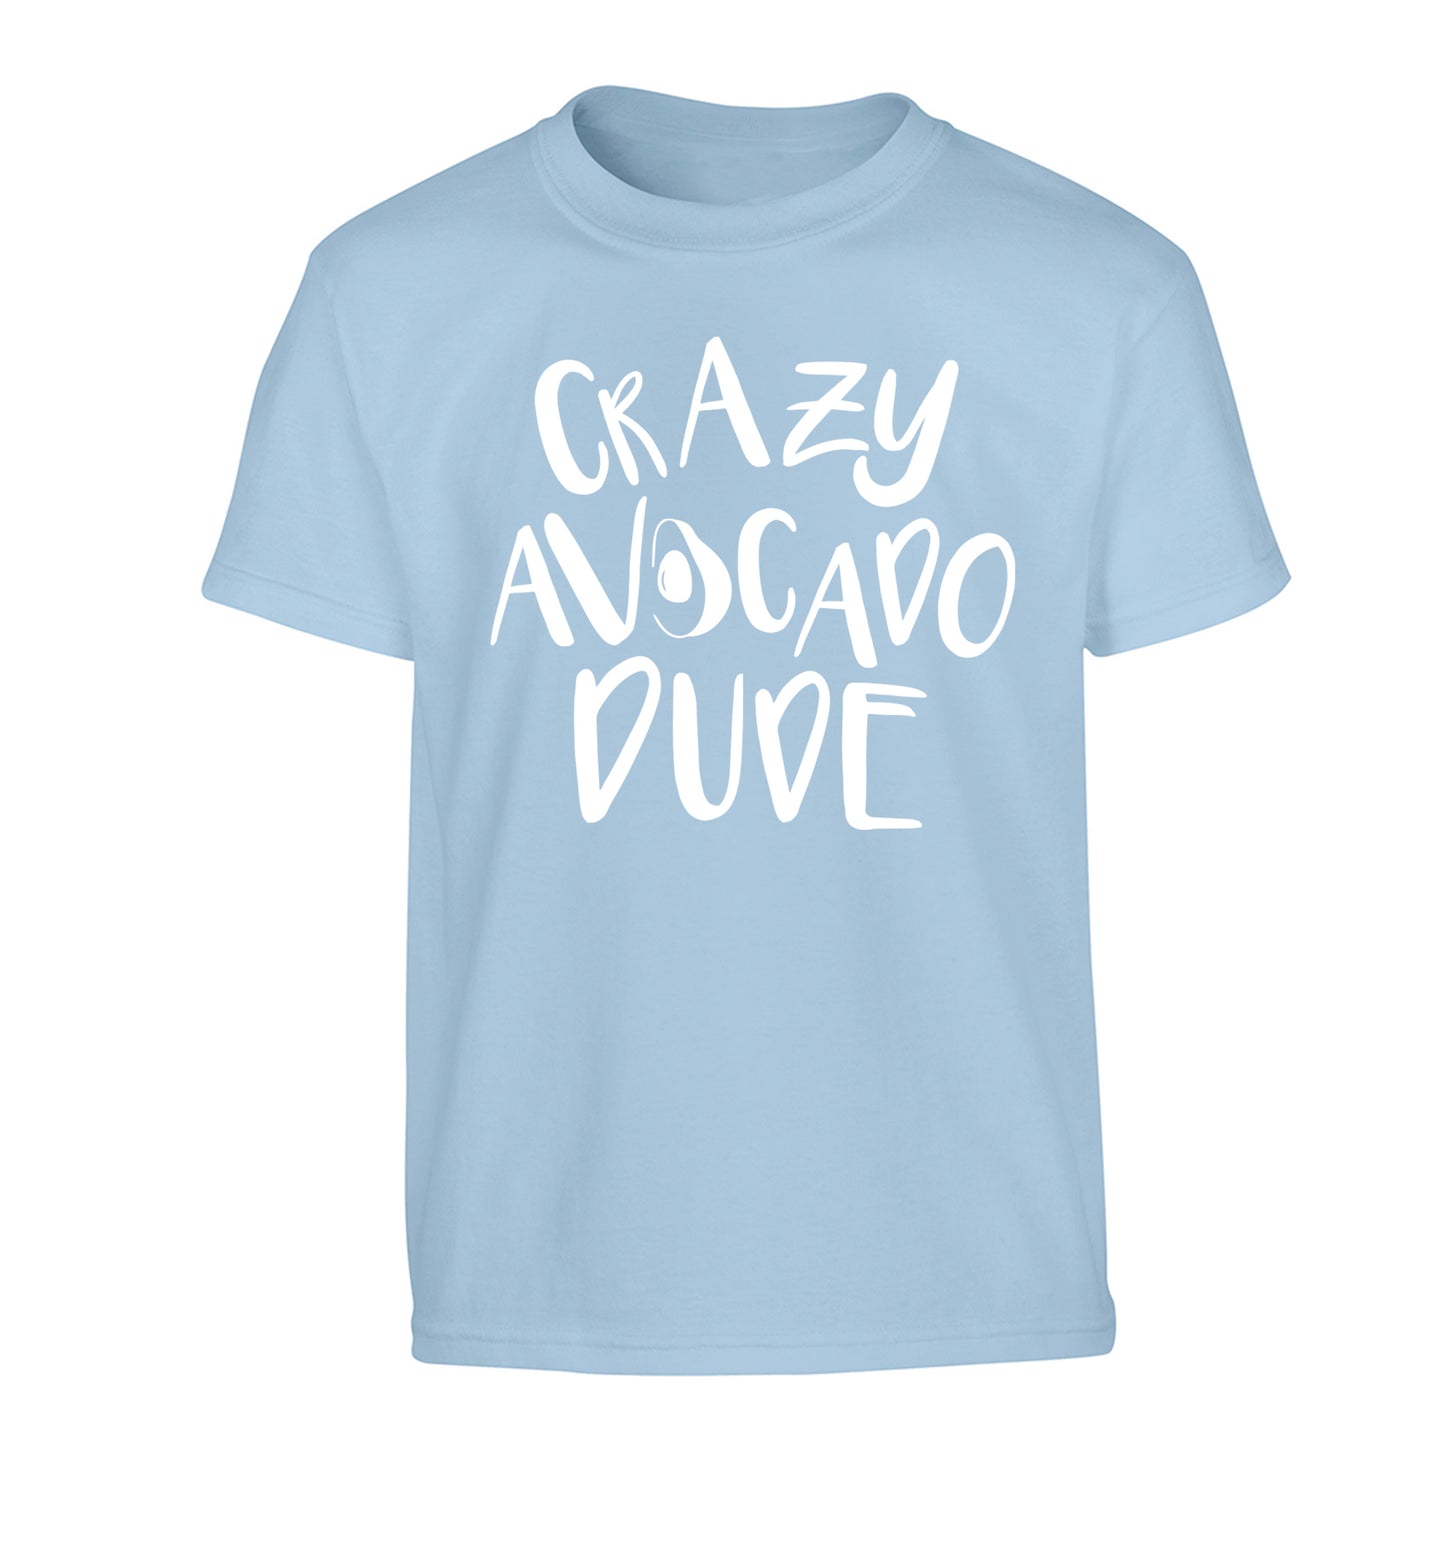 Crazy avocado dude Children's light blue Tshirt 12-14 Years